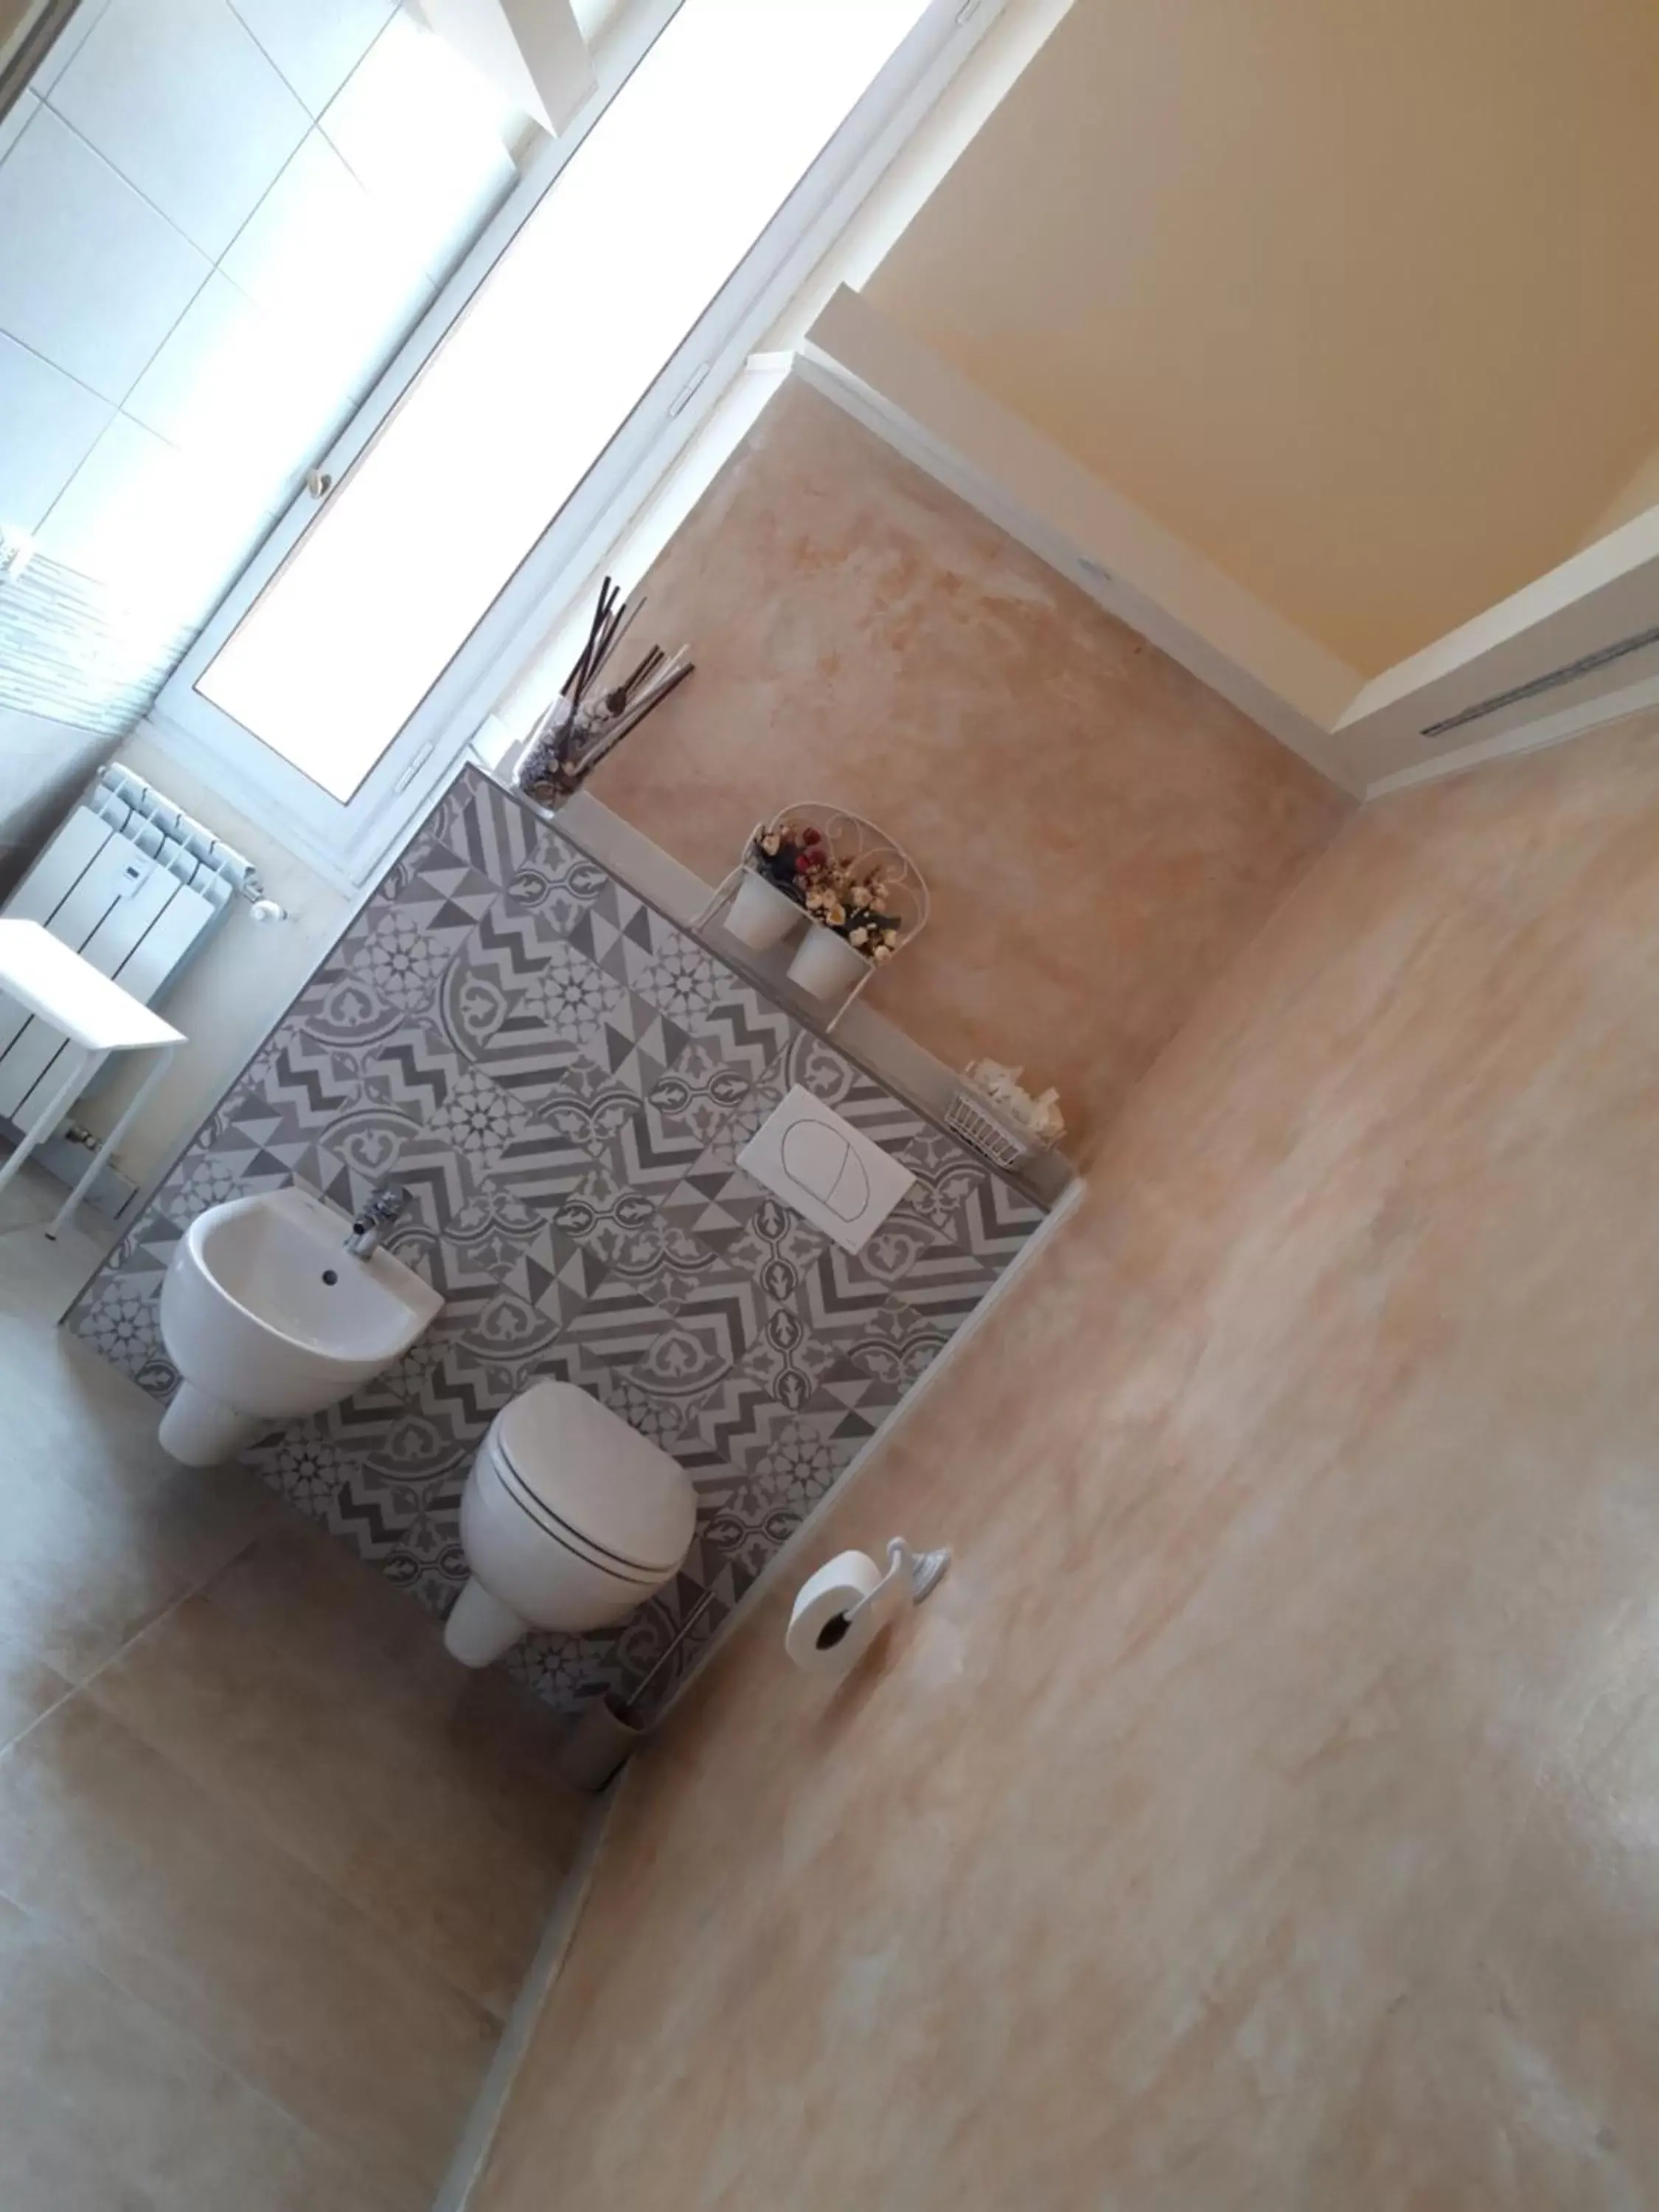 Bathroom in Il Sorriso